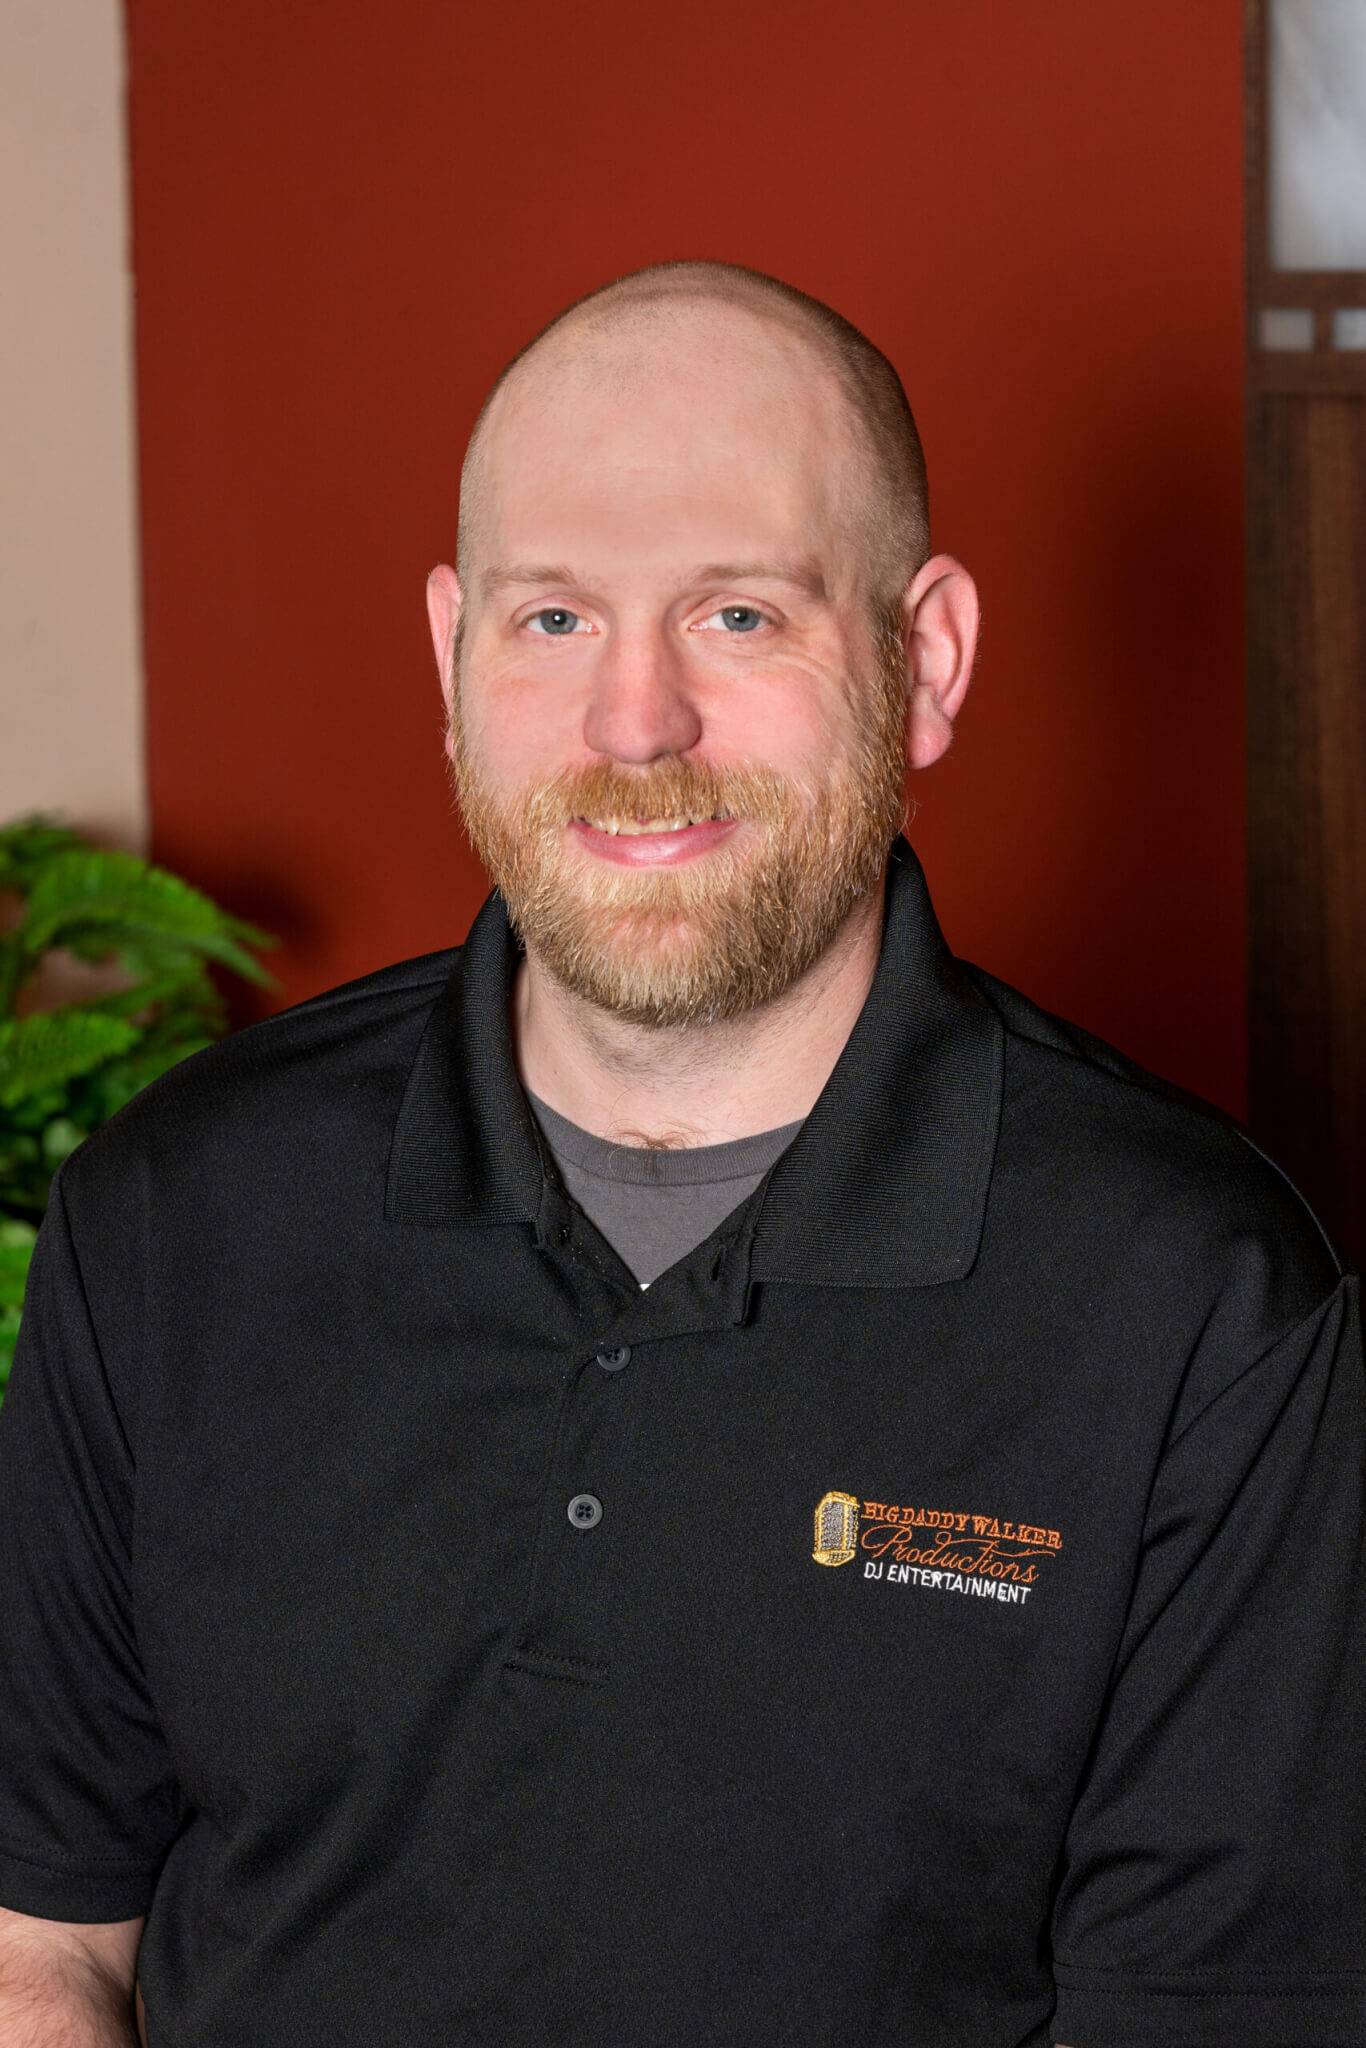 A bald man in a black polo shirt providing wedding DJ services in Cincinnati, Ohio.